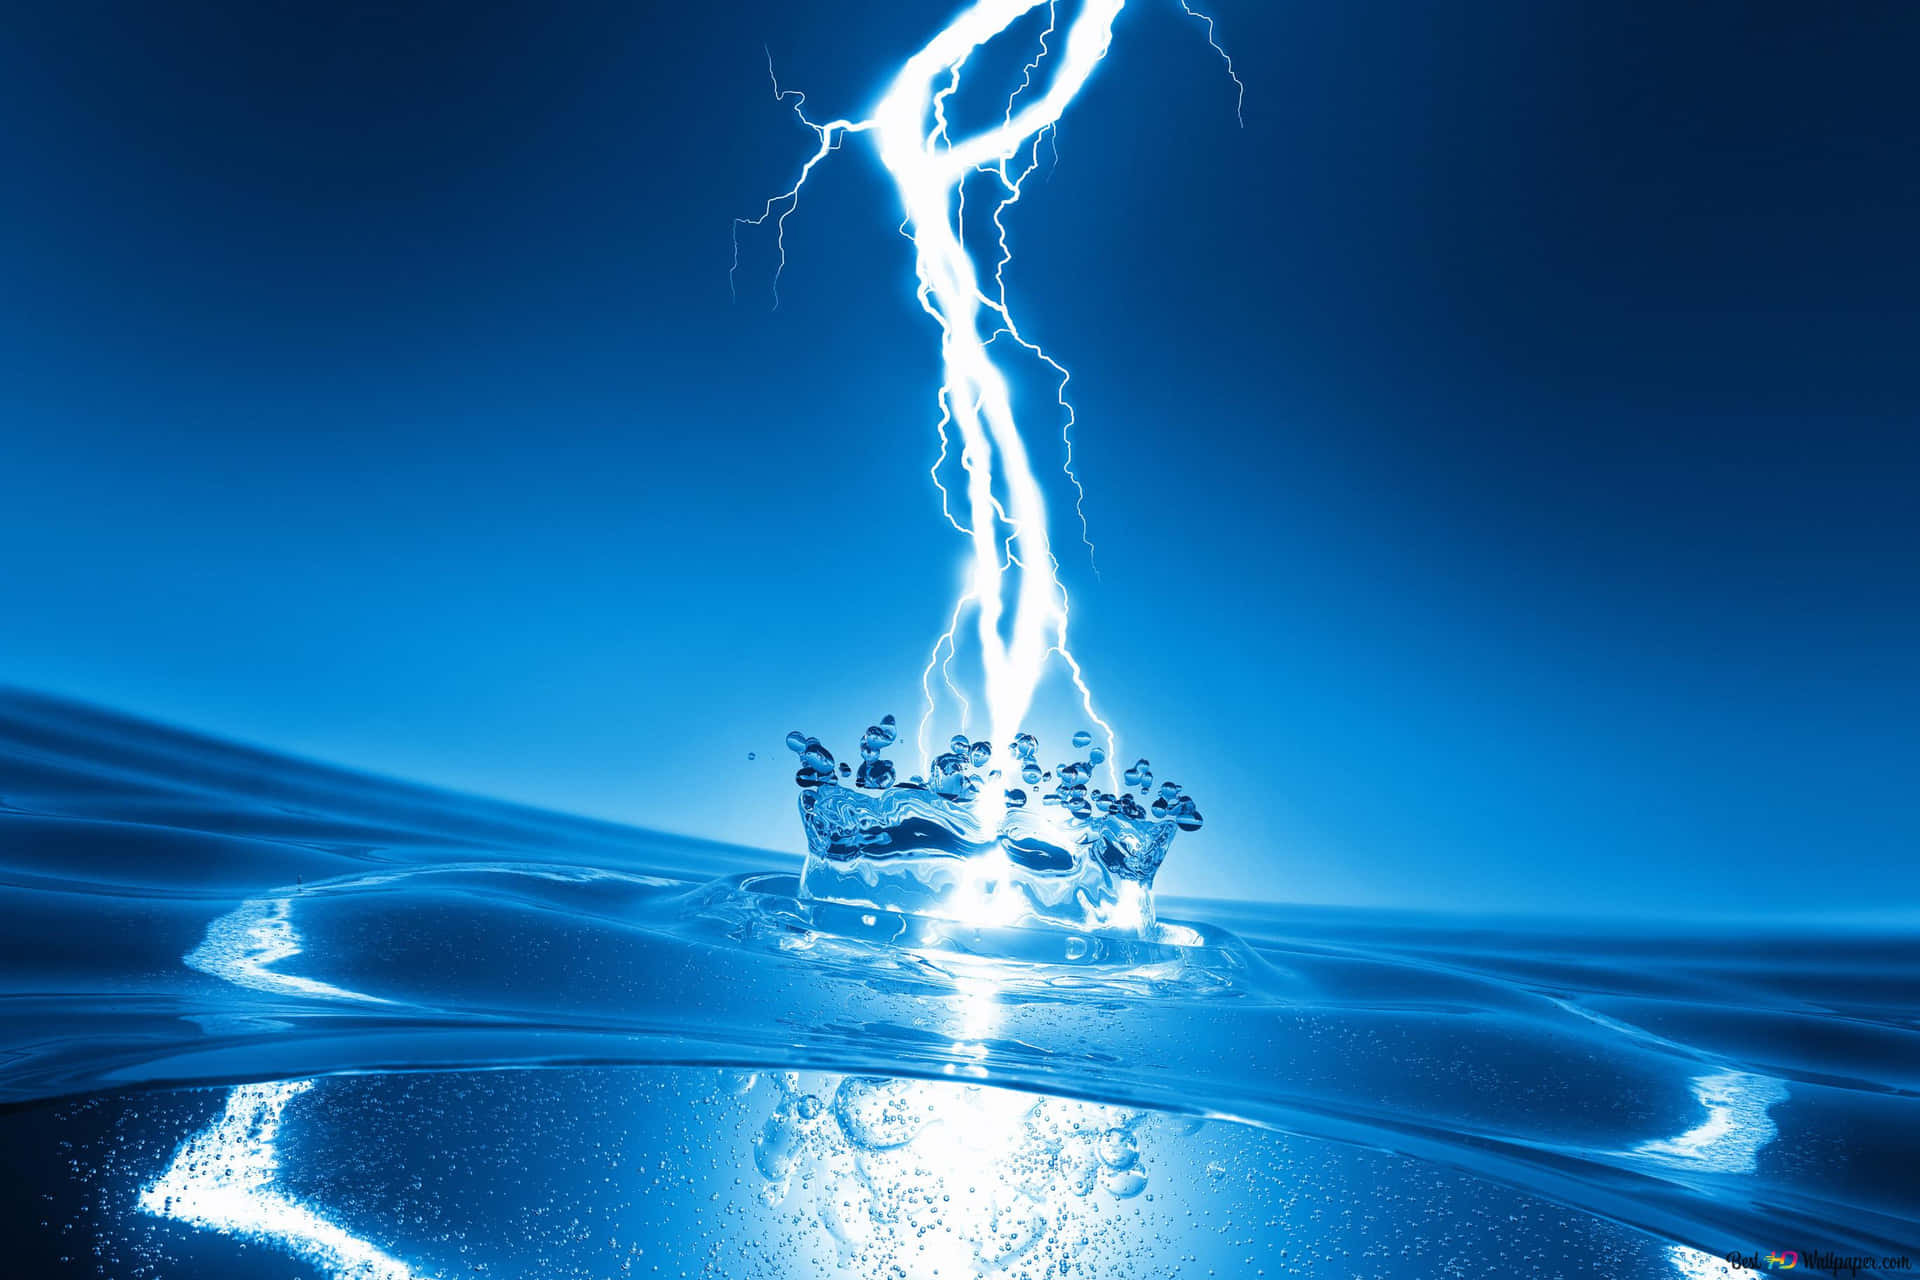 Electrifying Blue Lightning Strikes